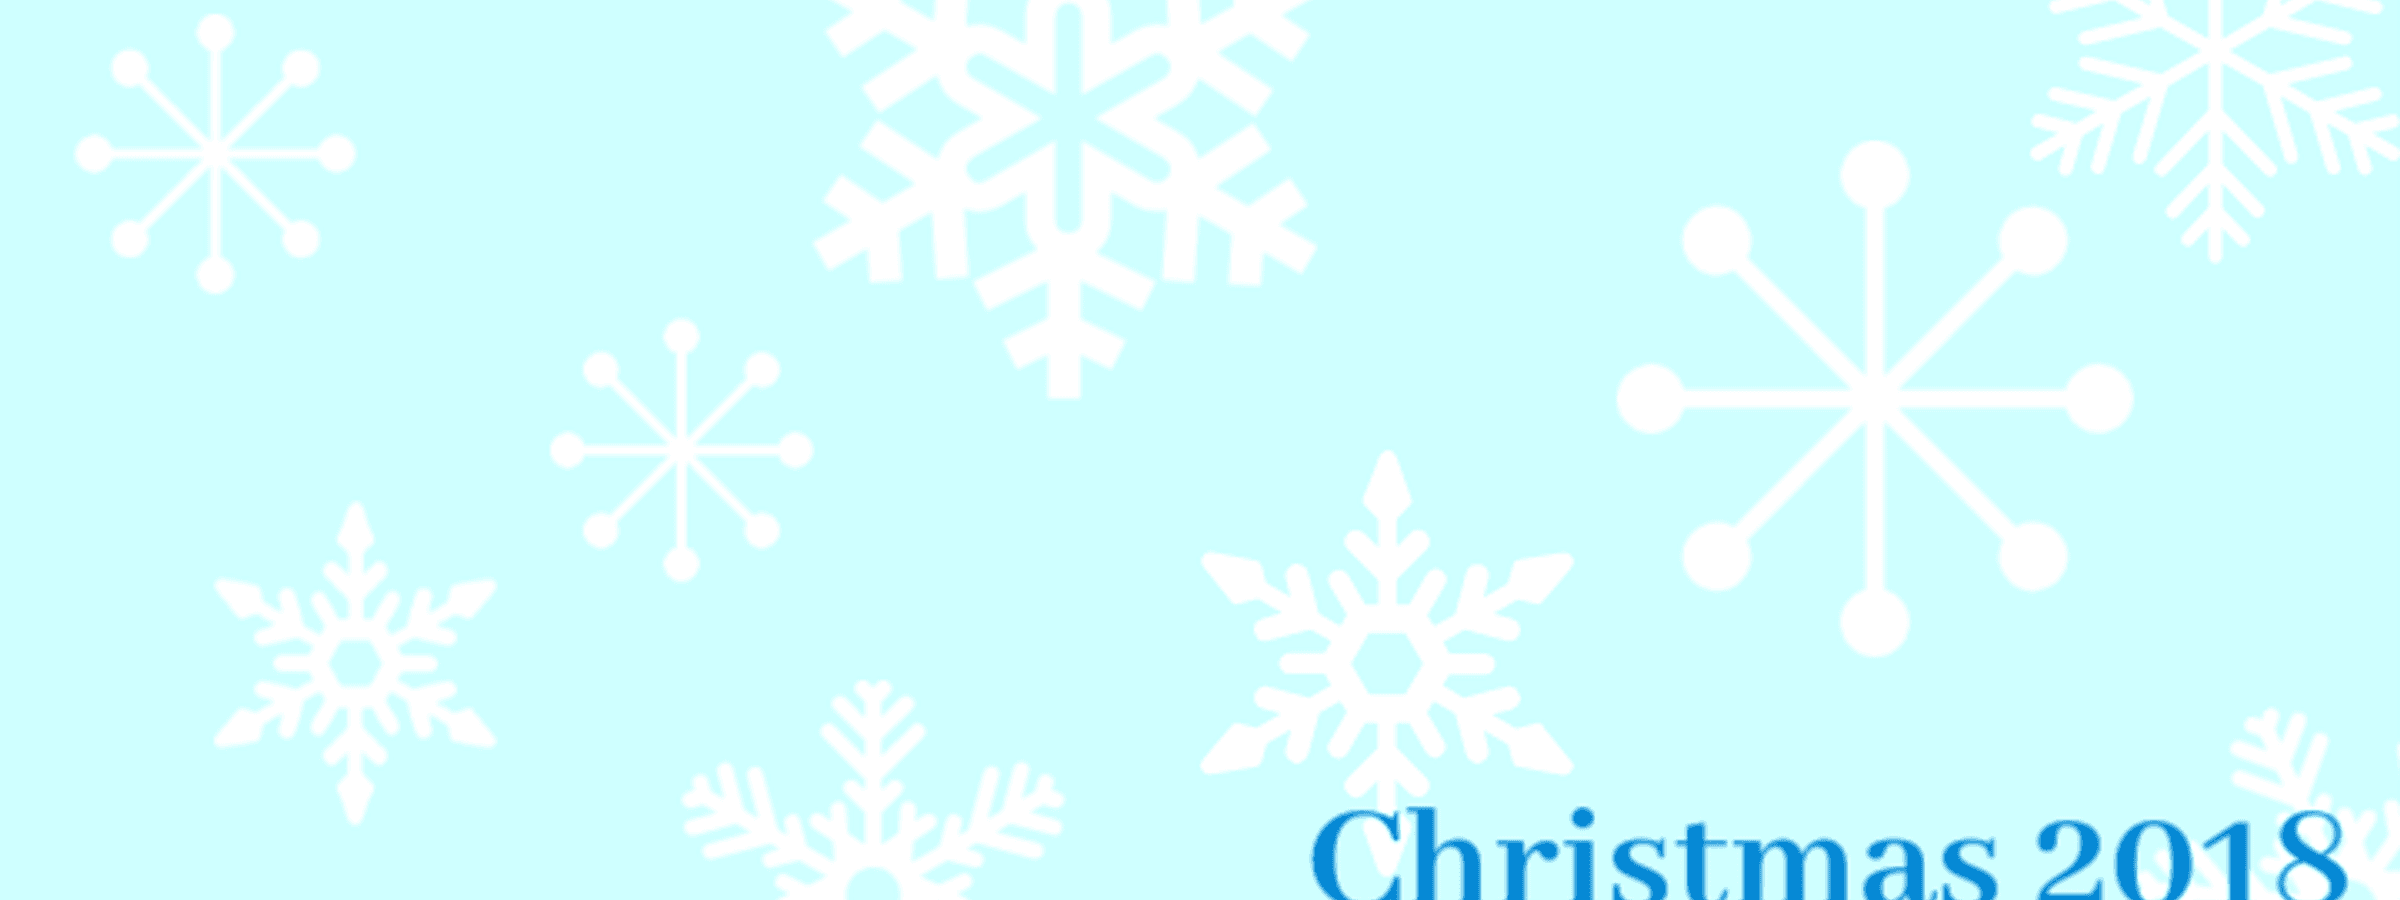 An image of snowflakes and "Christmas 2018".